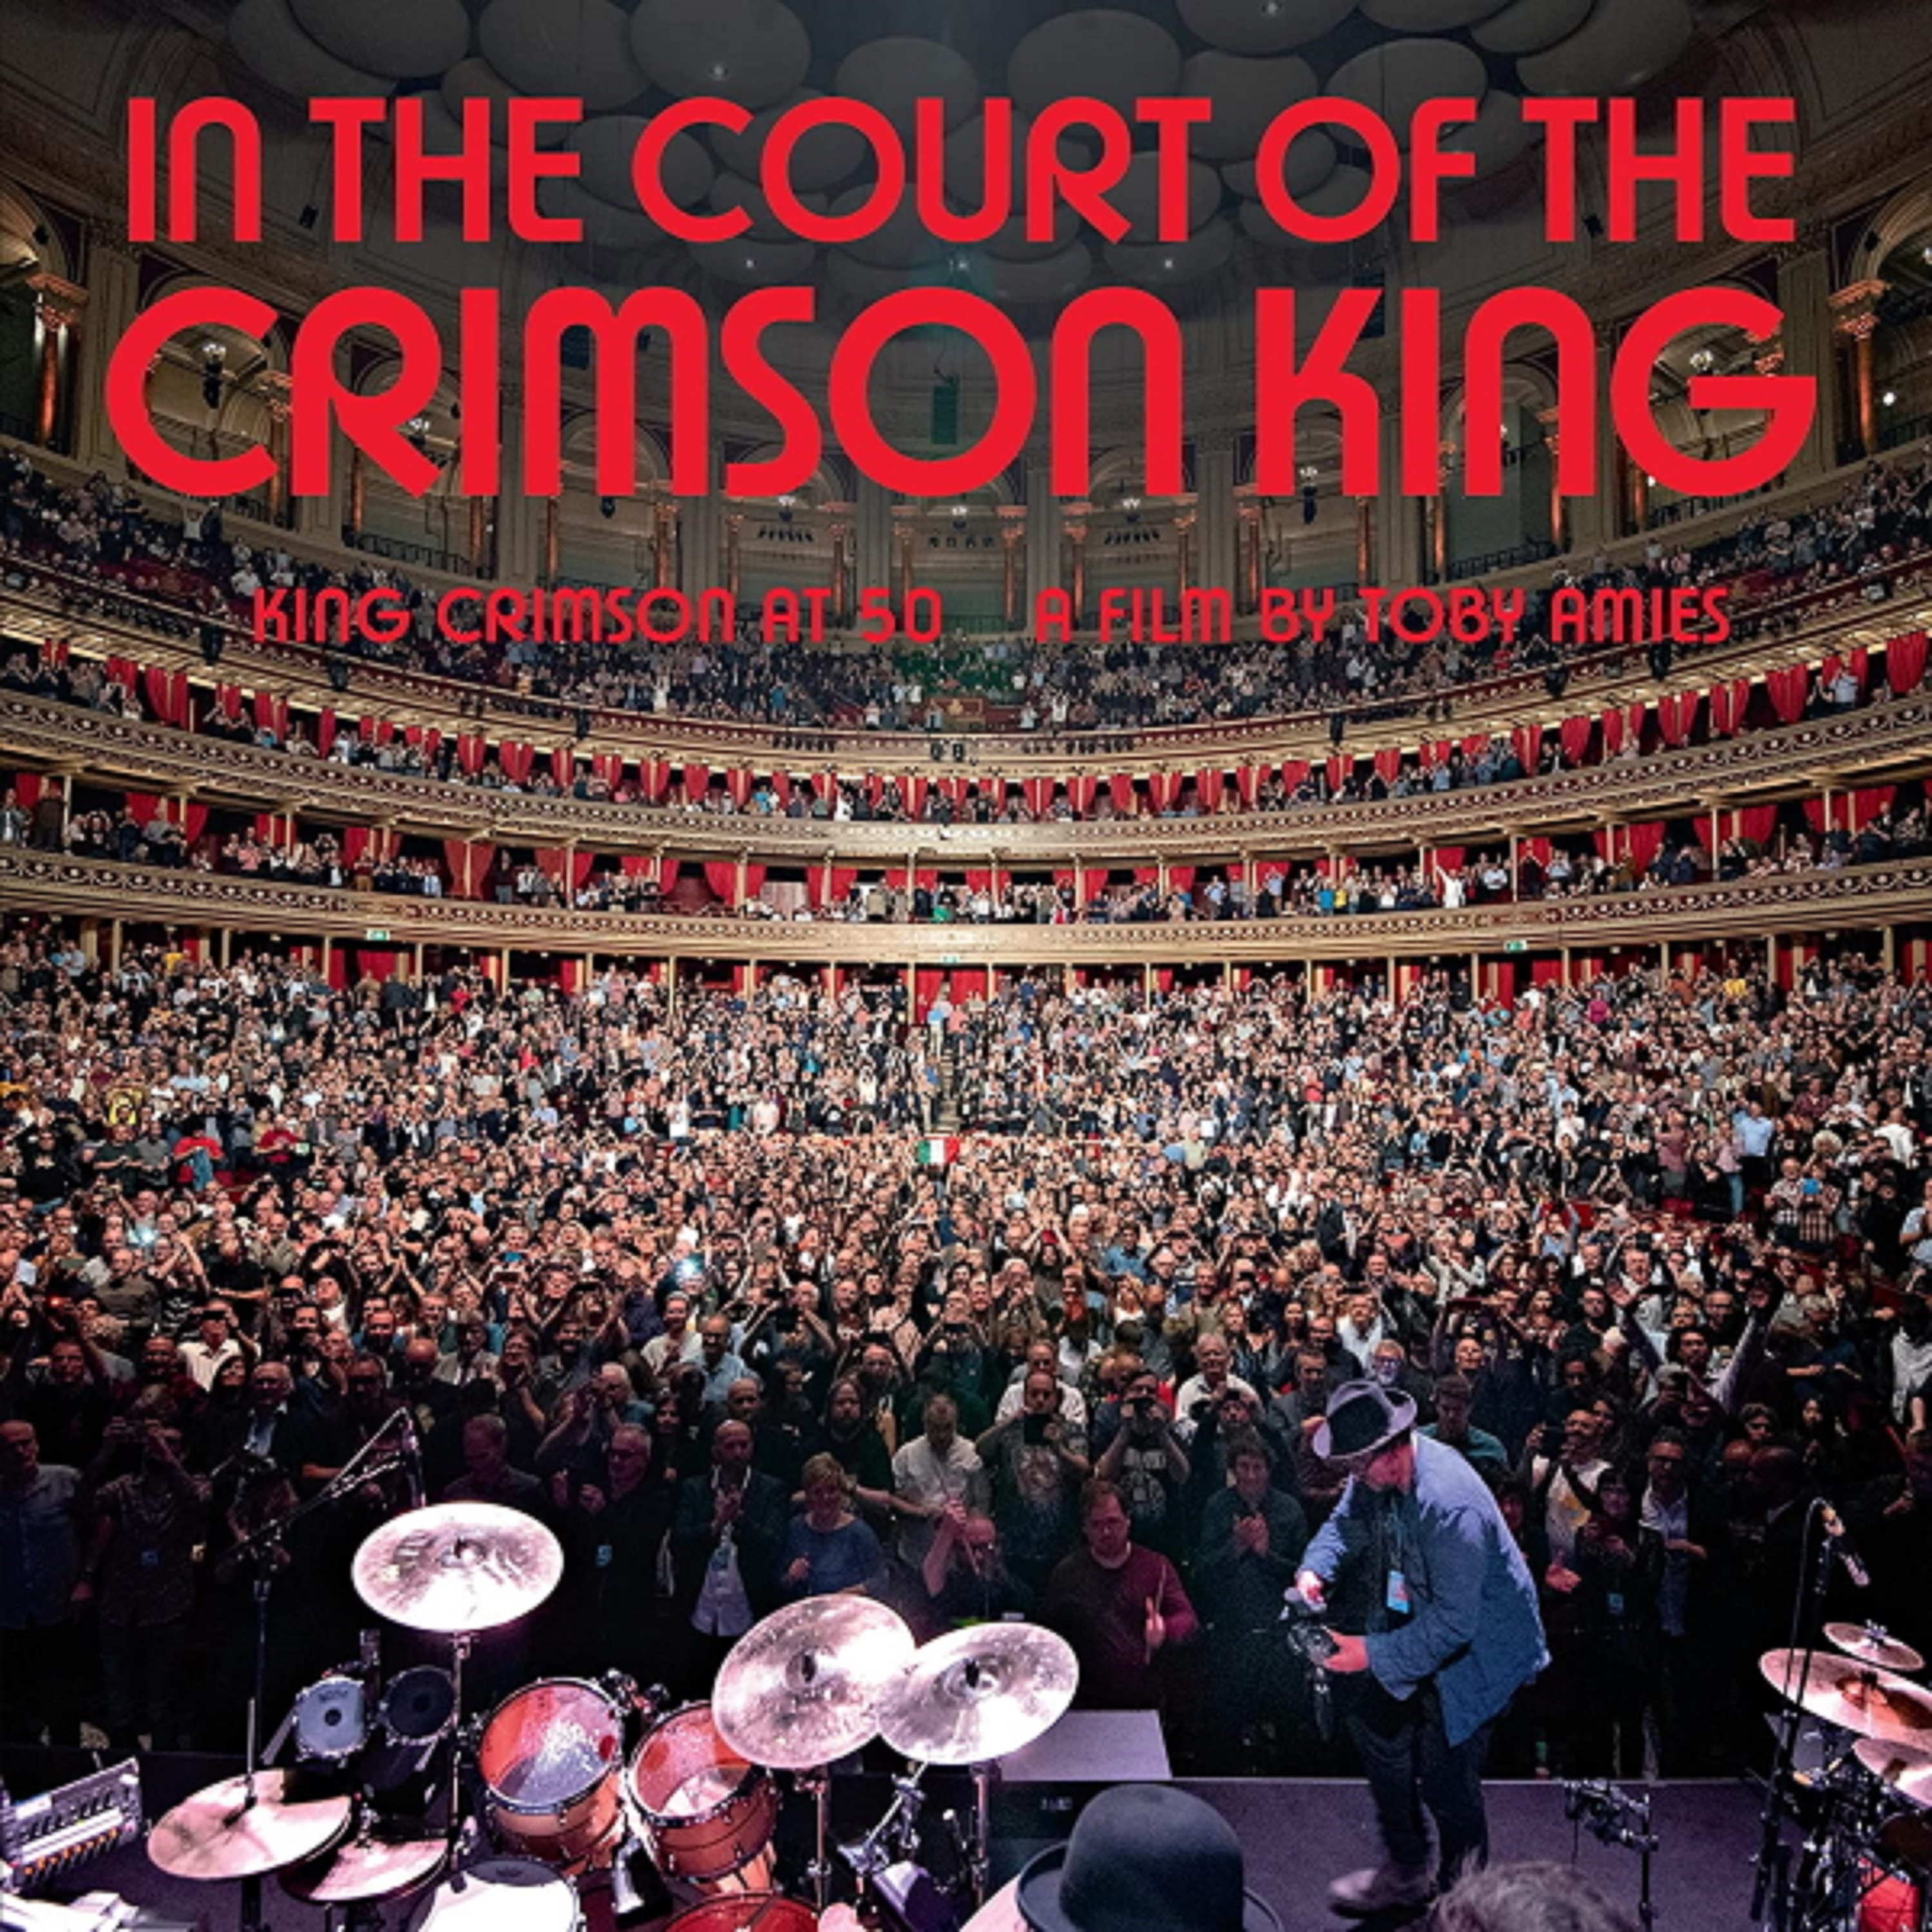 King Crimson's “In The Court Of The Crimson King – King Crimson At